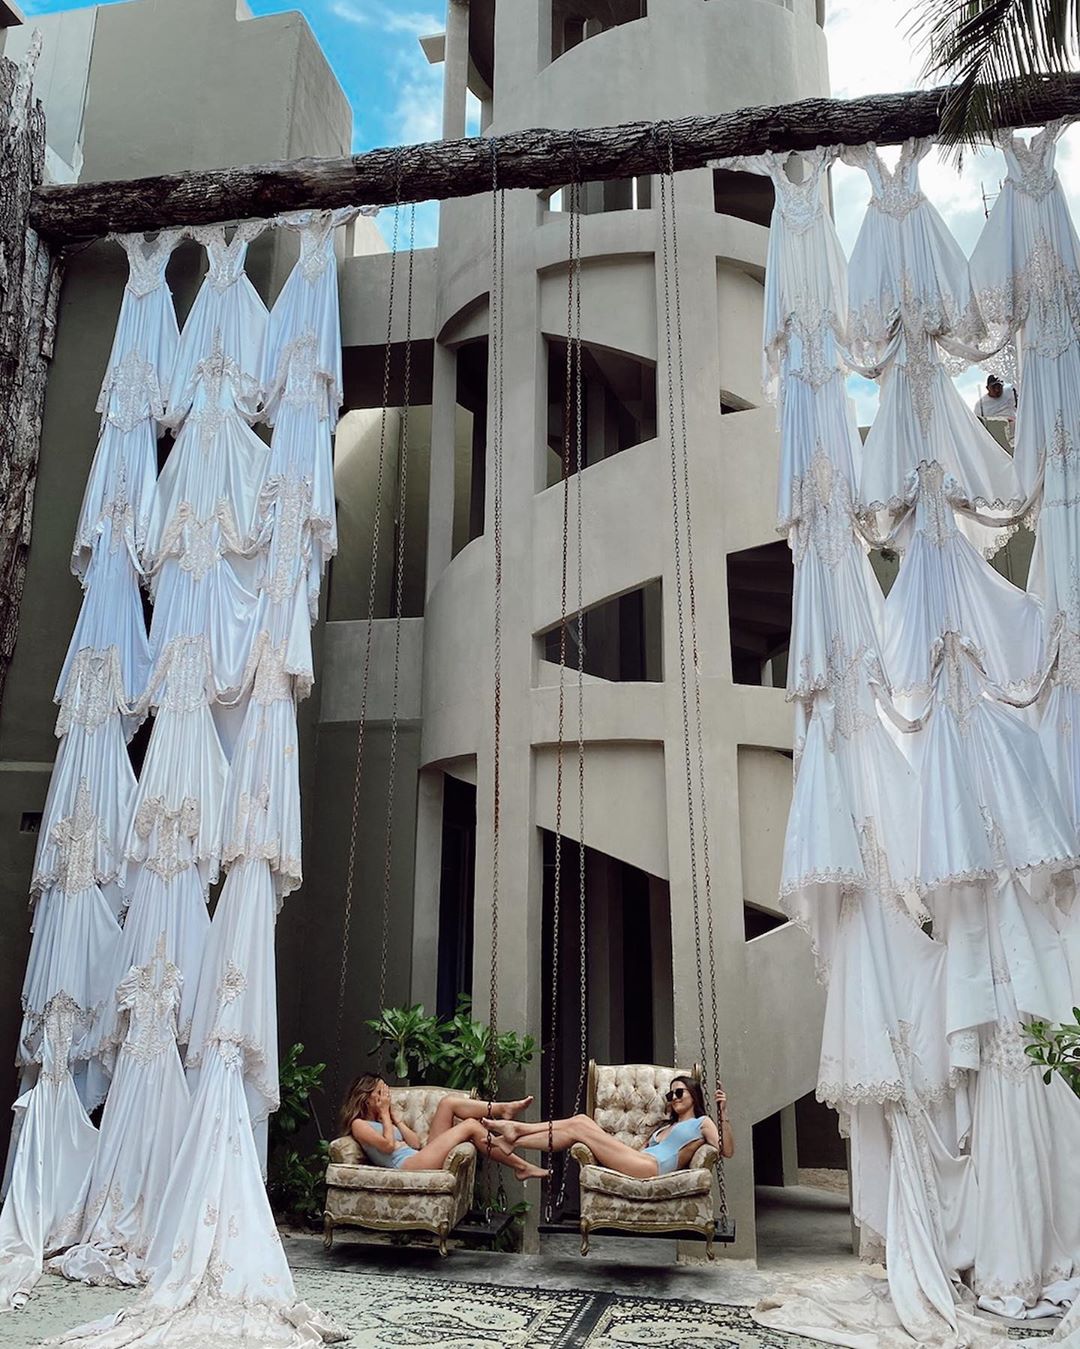 Andi Dorfman & Amanda Stanton Put on a Very Sexy Display in Tulum (46 Photos)